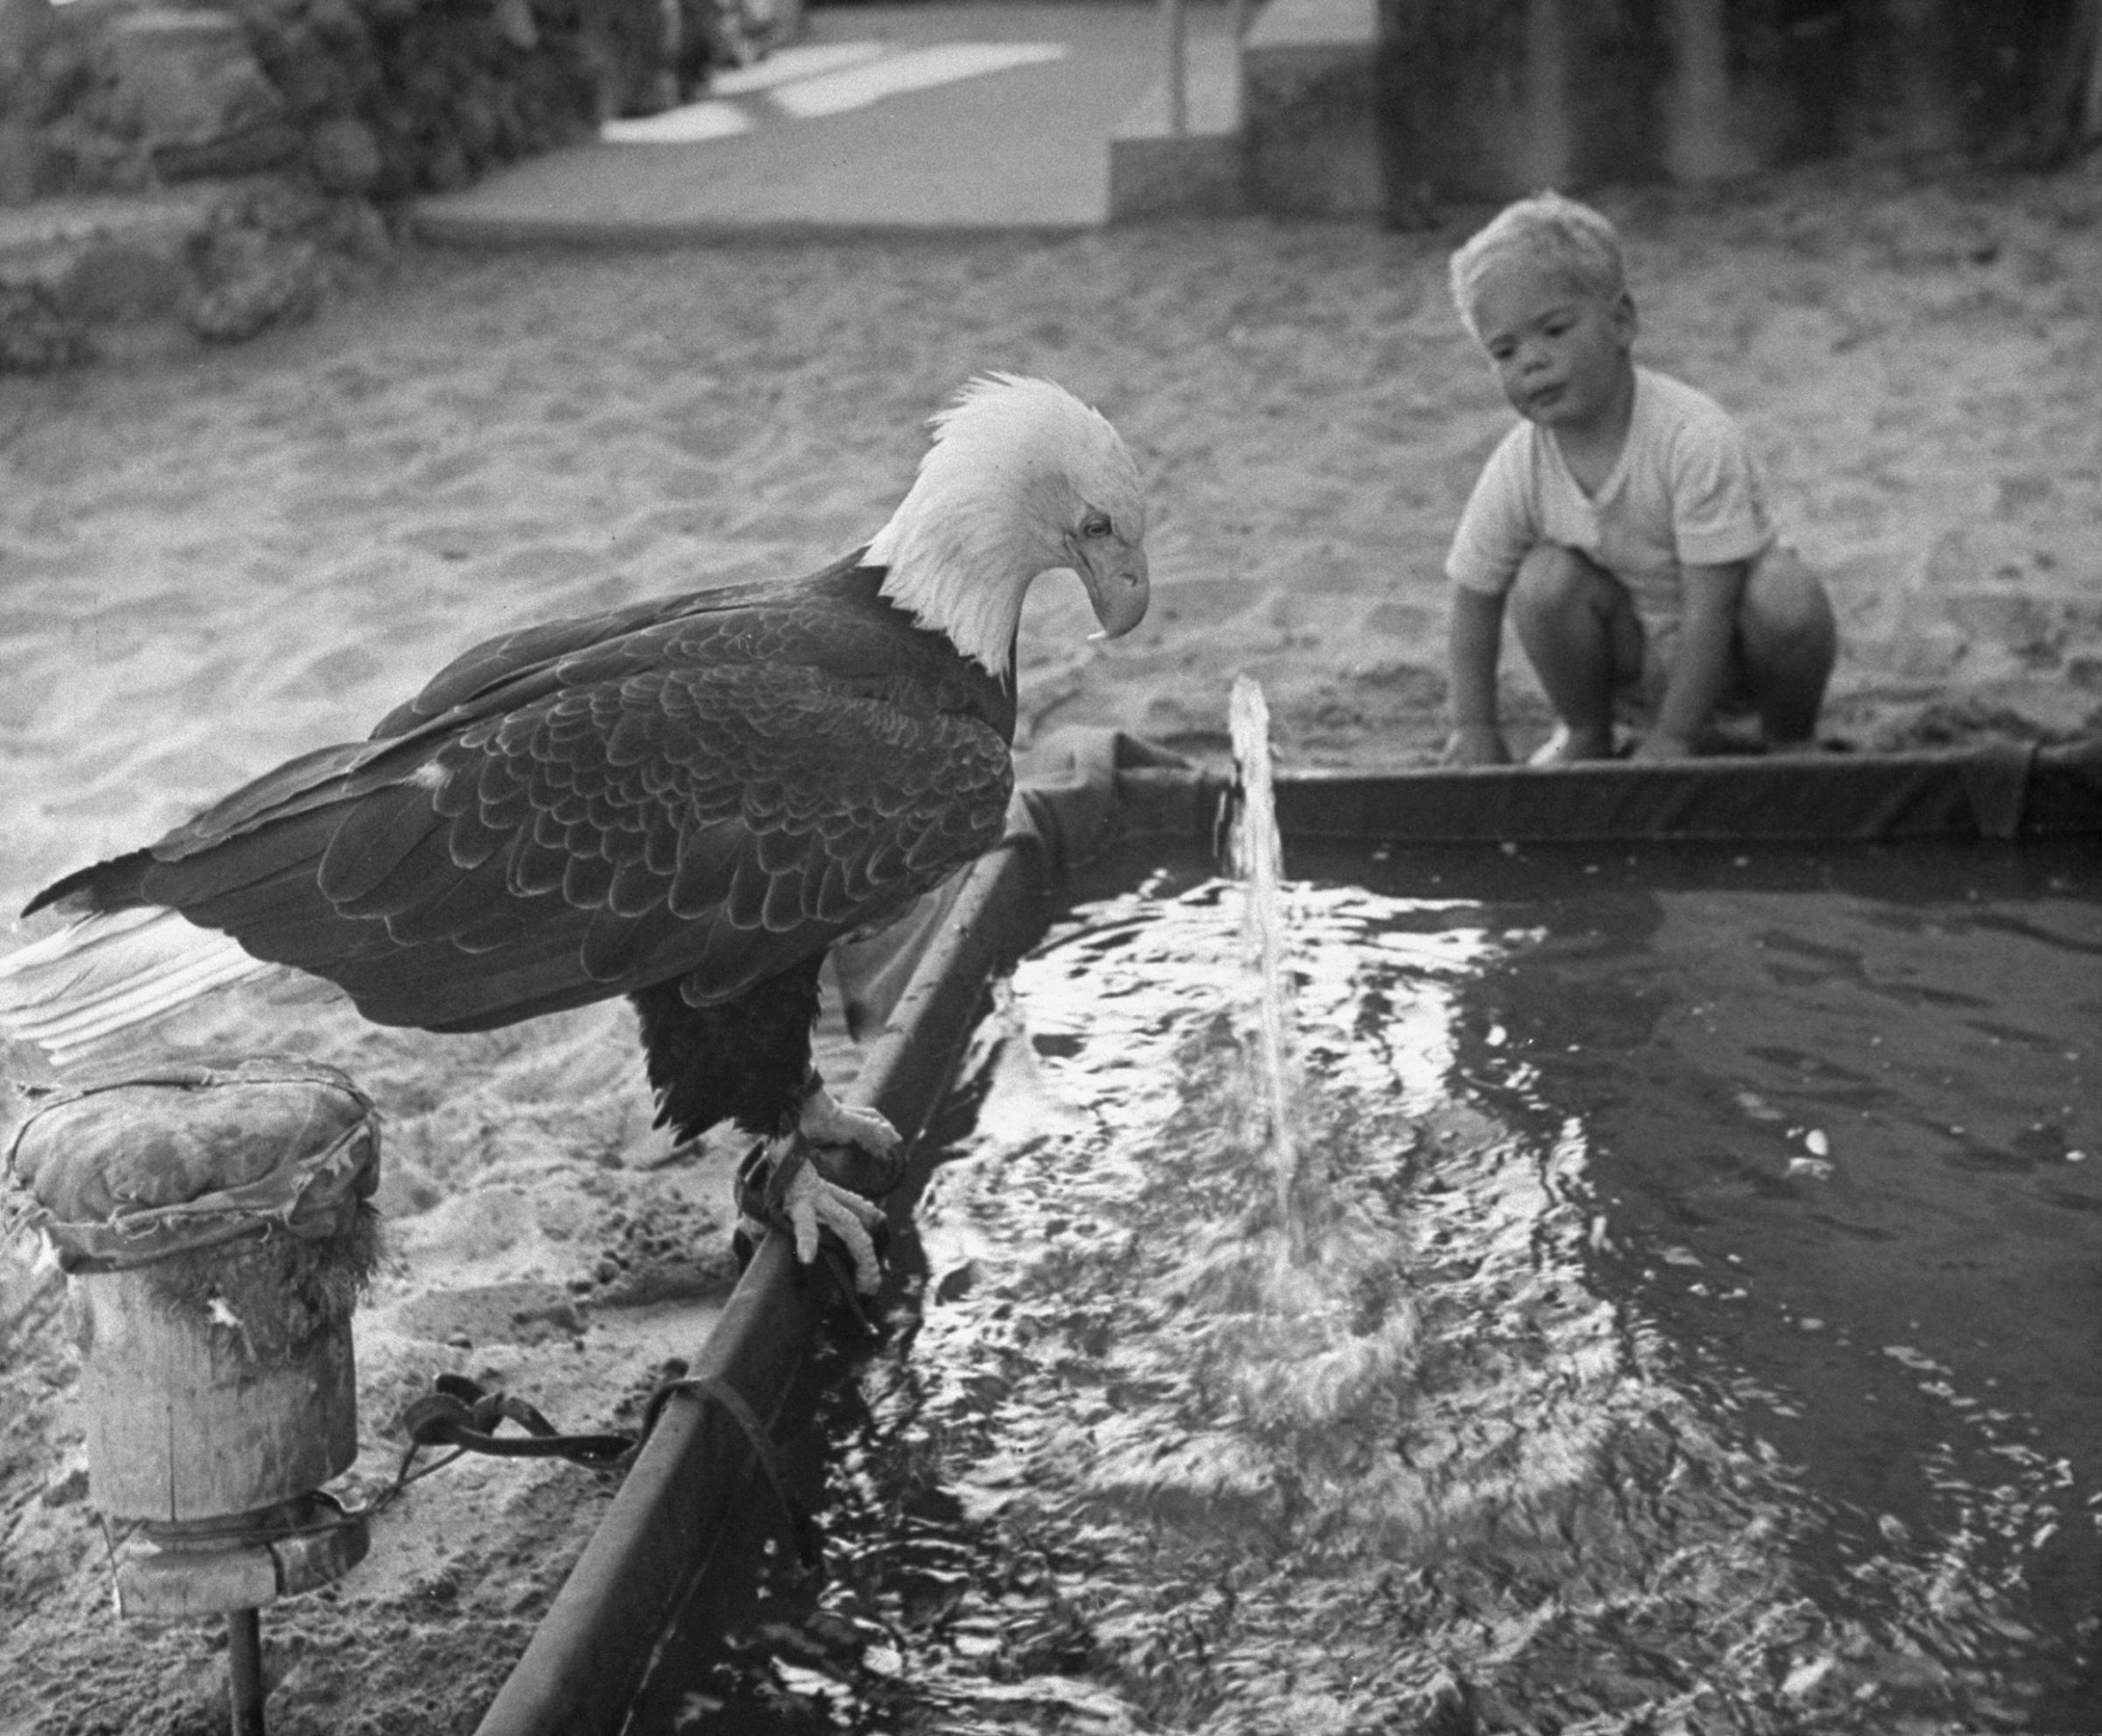 A Bald Eagle's bath in 1949 California.